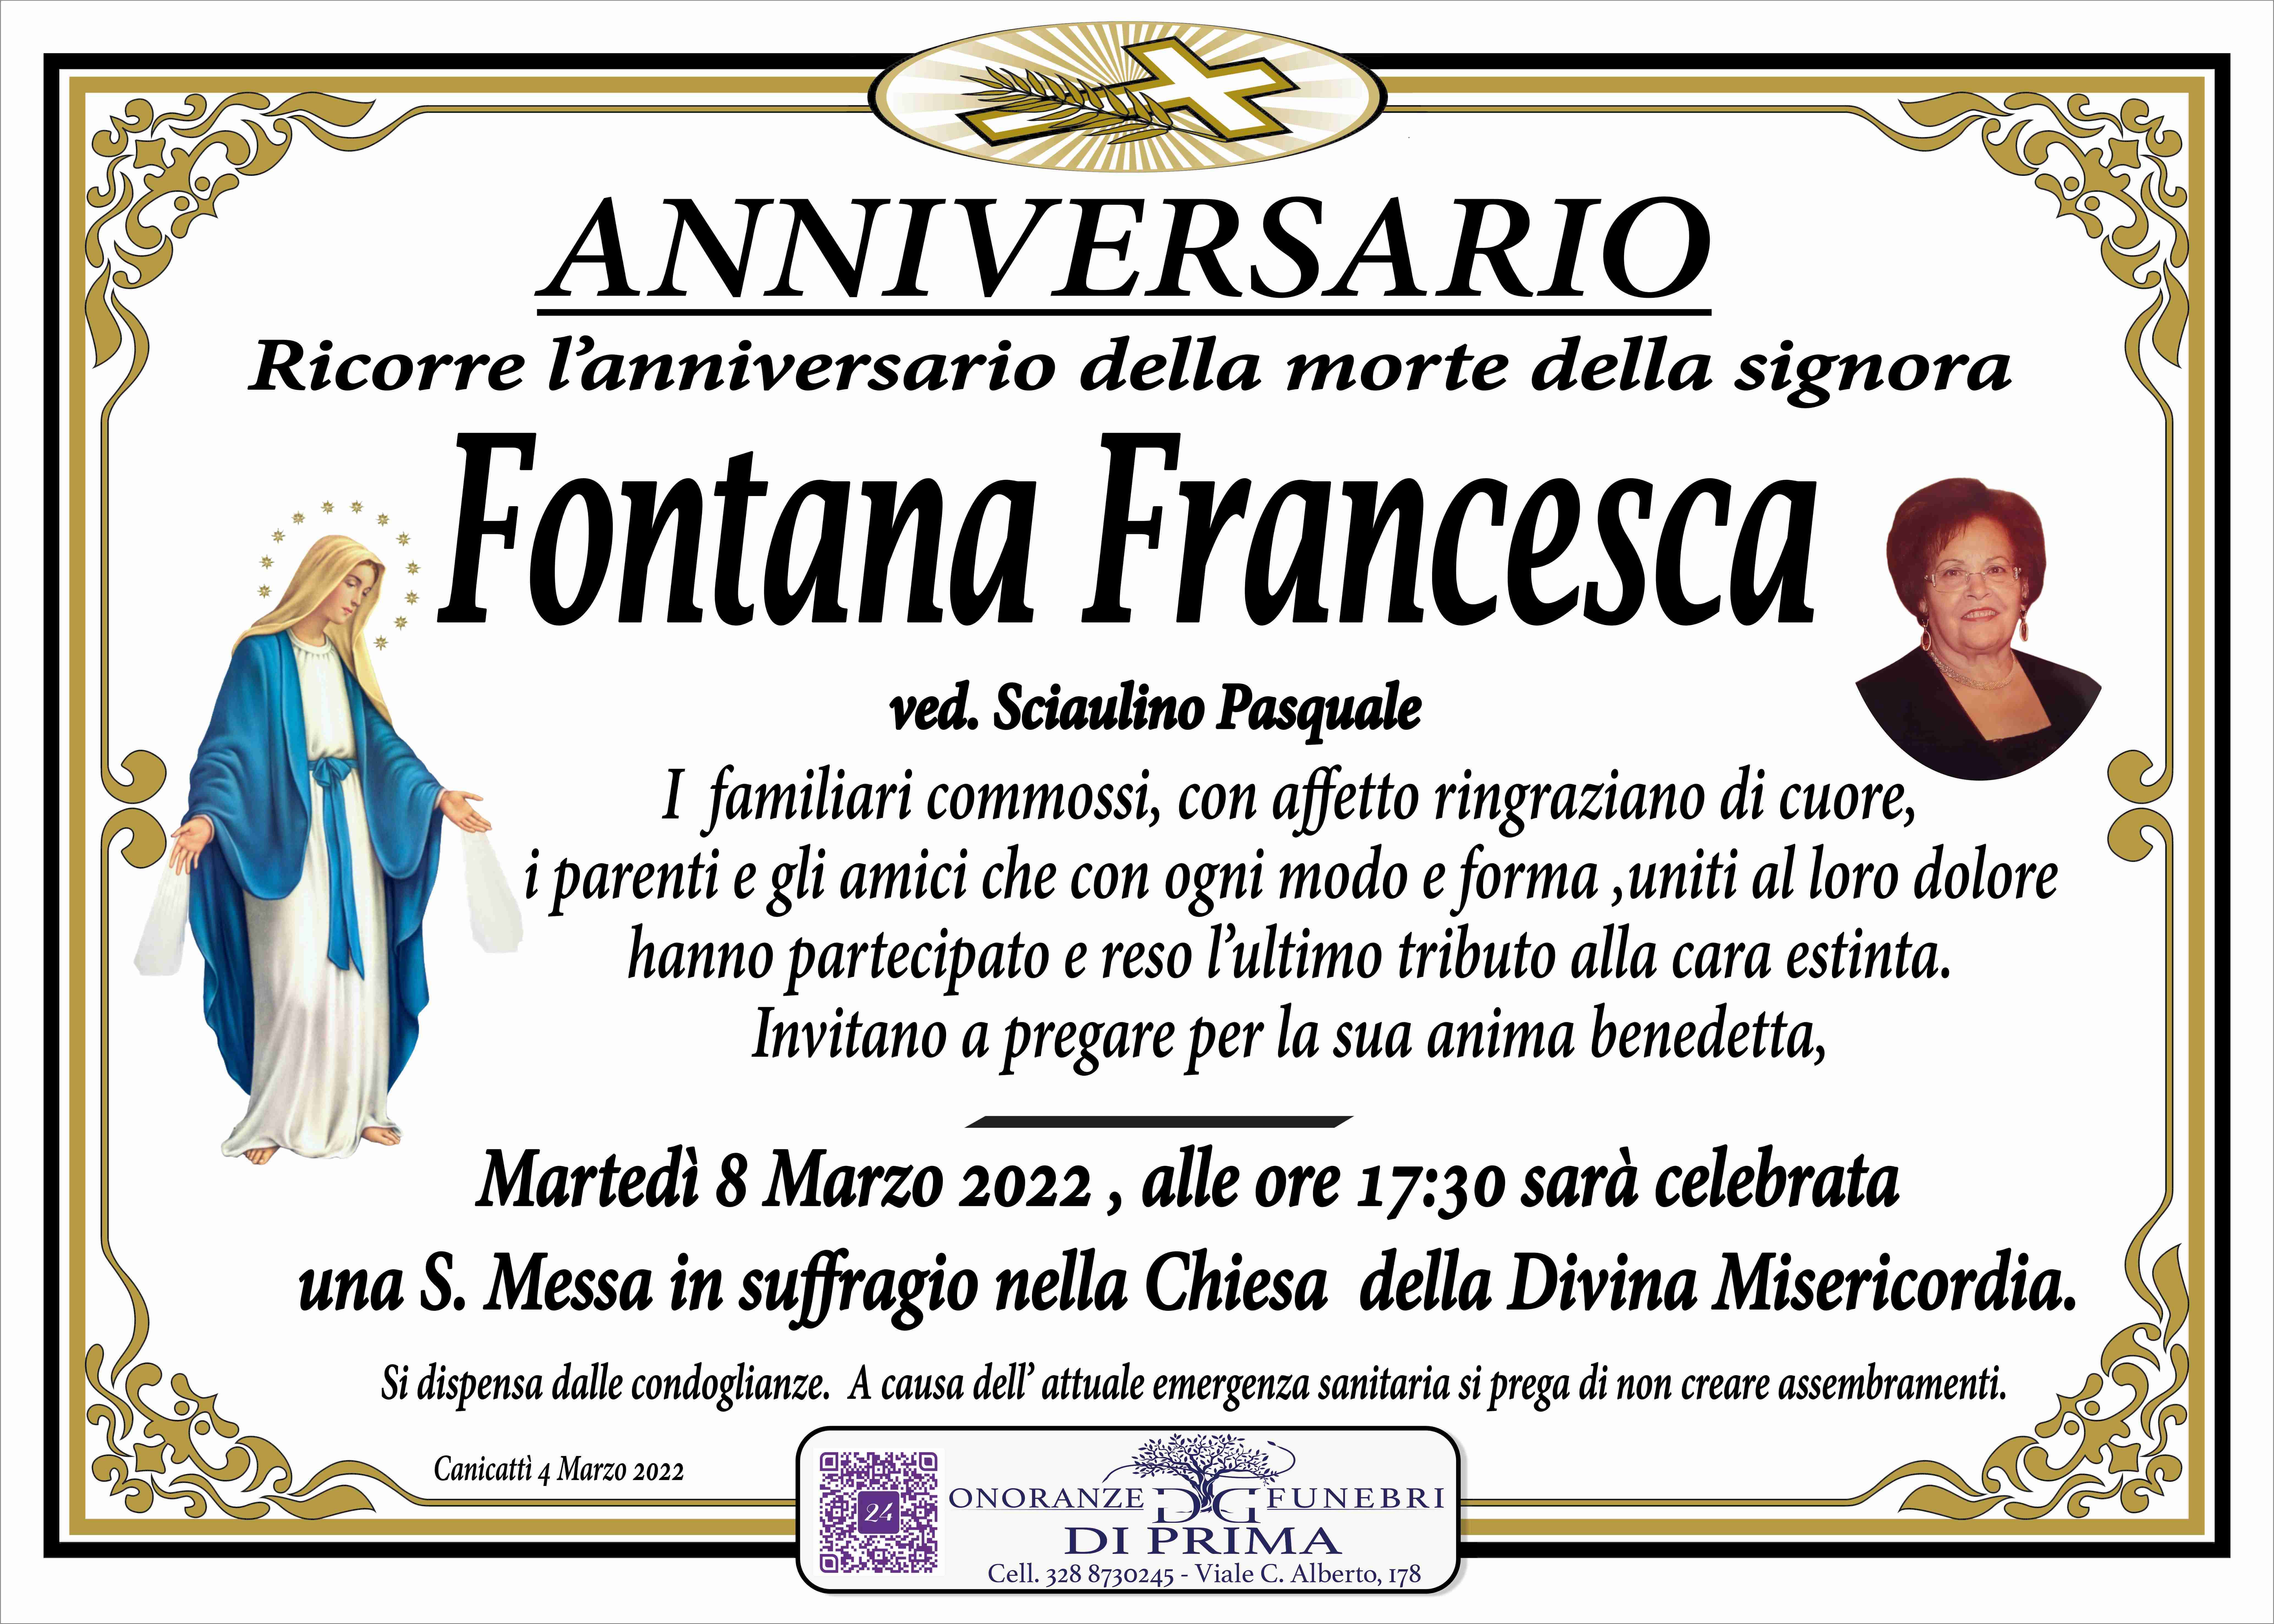 Francesca Fontana